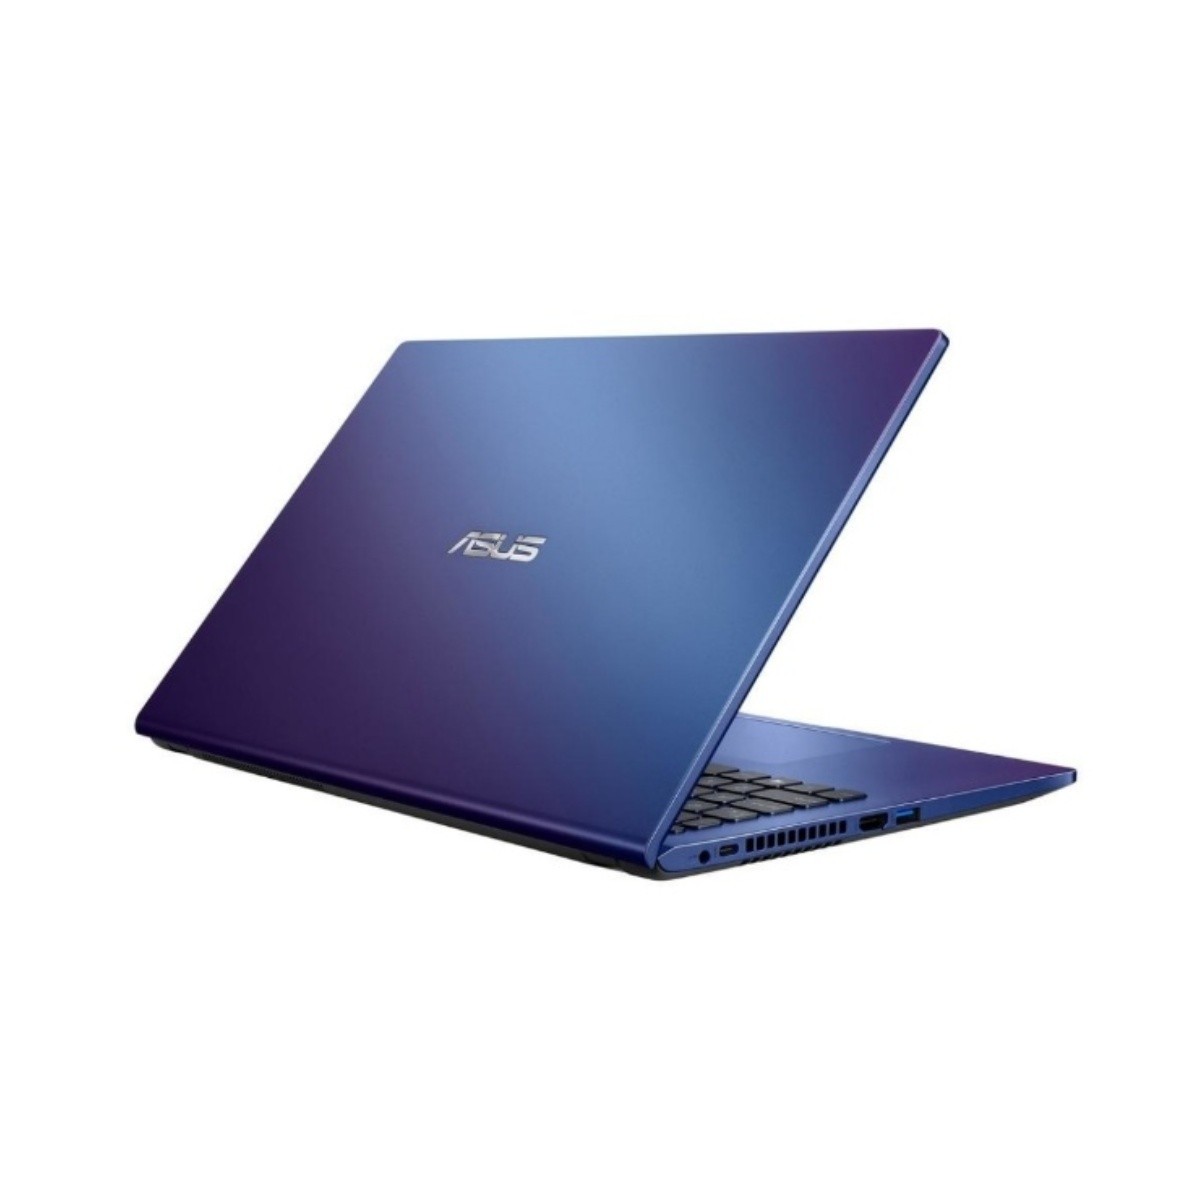  Laptop Asus Vivobook Ci7 X515 2.8Ghz, 11th Gen, Ram 8Gb, Disco SSD 512Gb, 15.6 FHD, Video 2Gb Nvidia MX330, Teclado Español, Windows 10, Color Blue, Gratis Mochila Asus, Nuevo